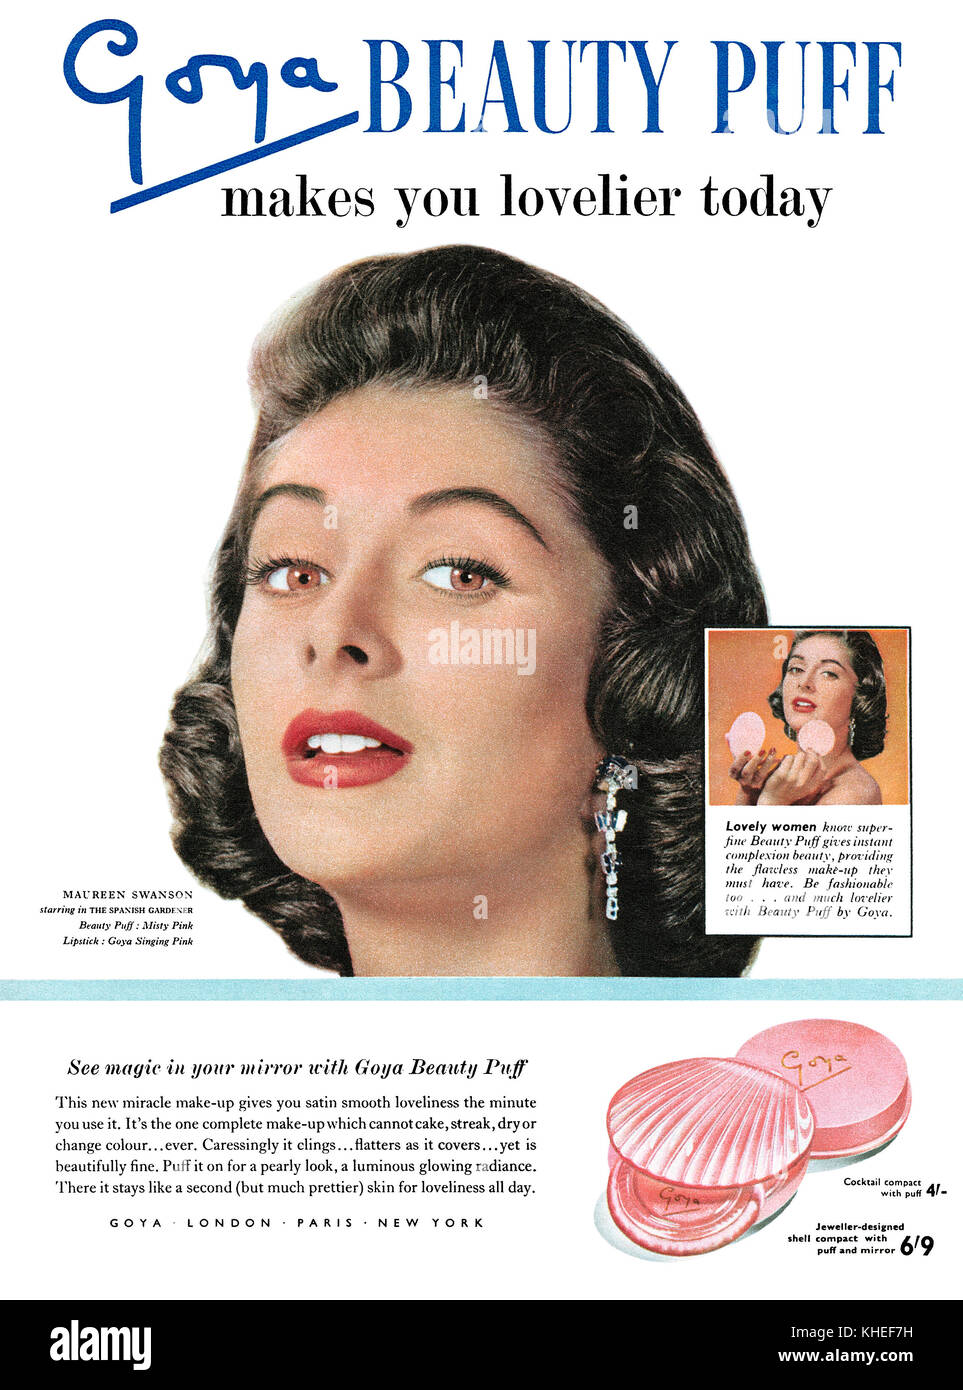 1957 British advertisement for Goya Beauty Puff face powder, featuring actress Maureen Swanson. Stock Photo